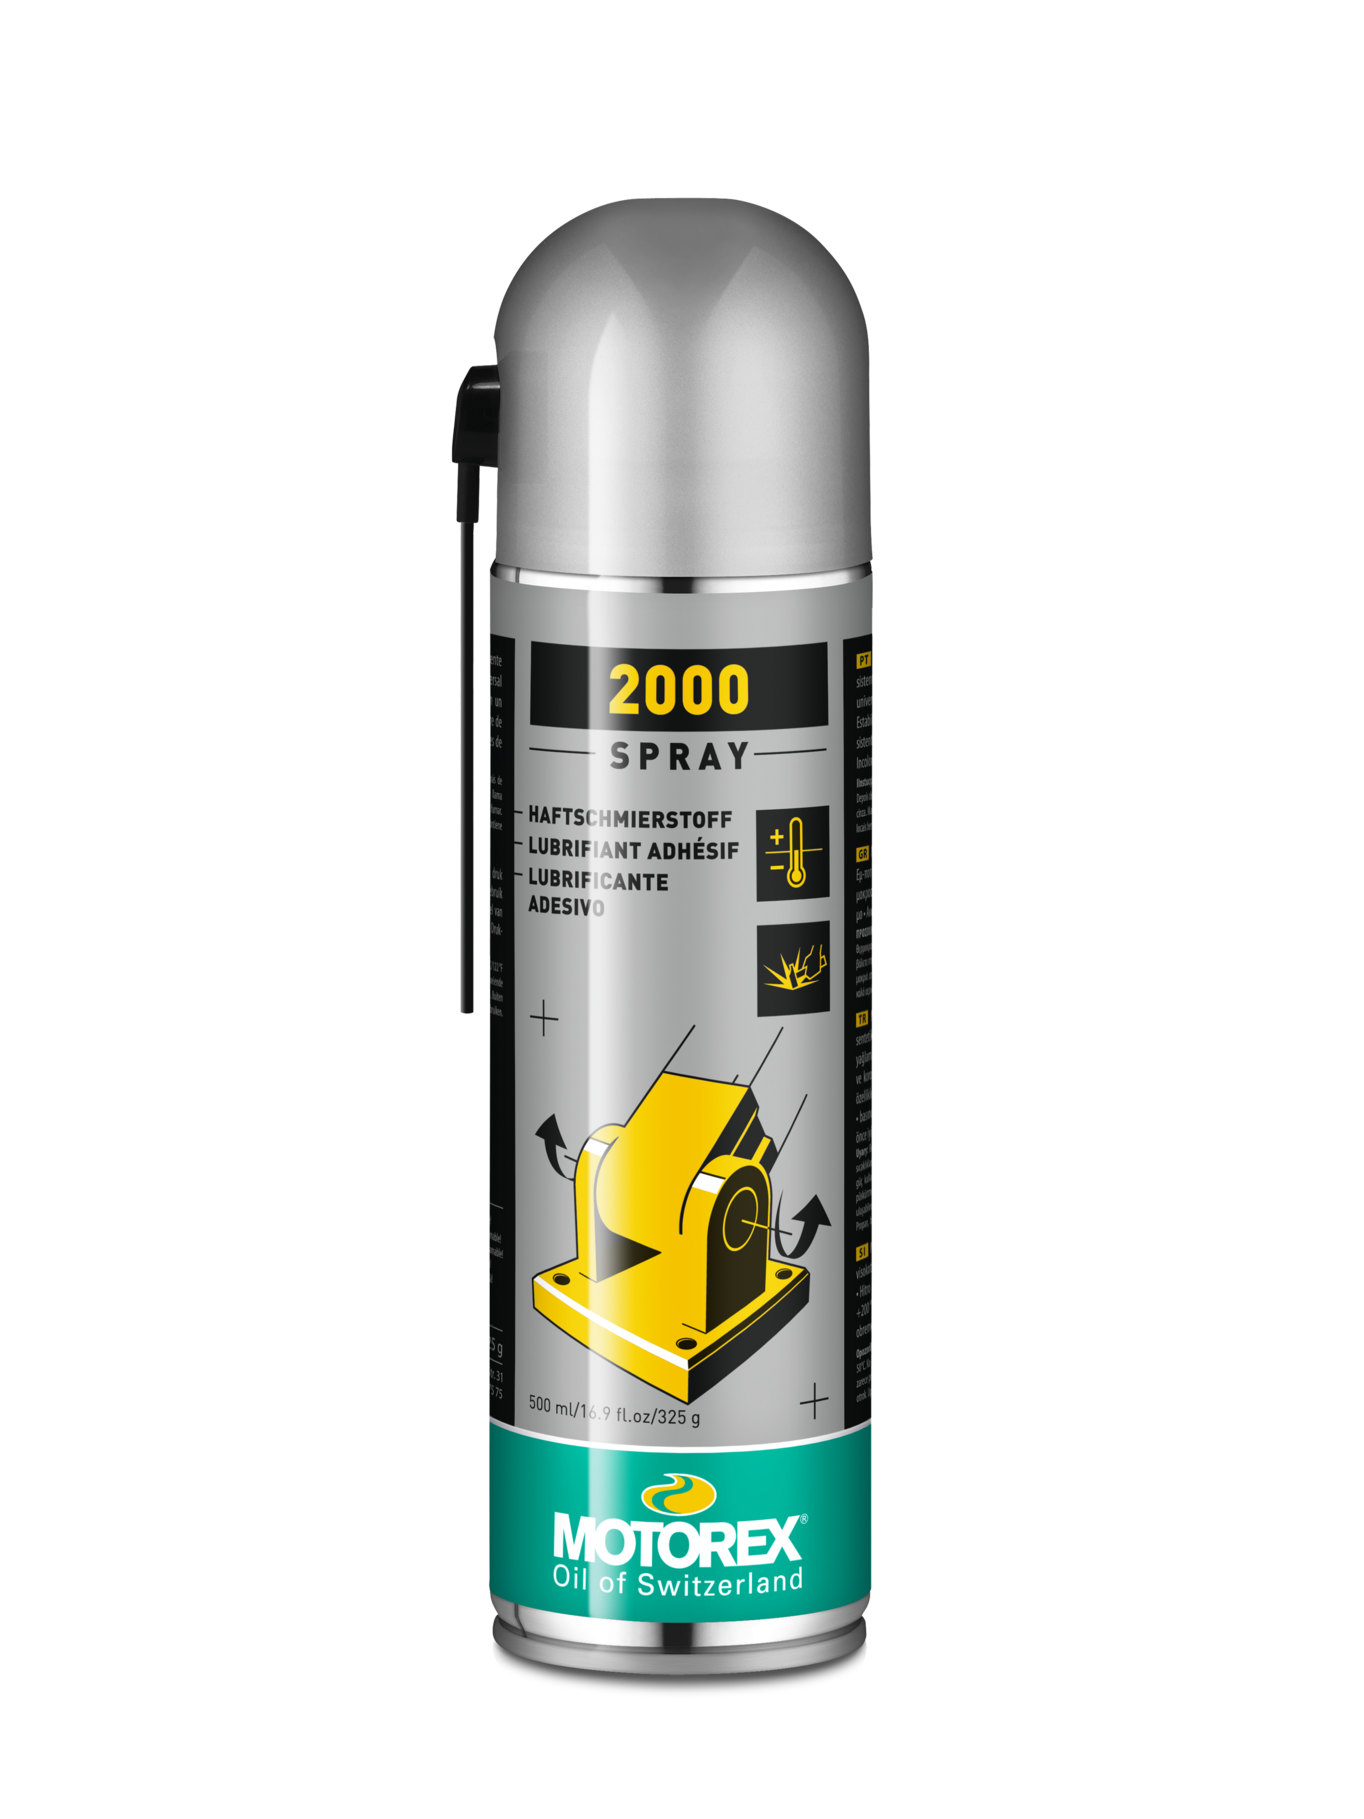 Motorex Spray 2000, 500 ml sprayflaska-image